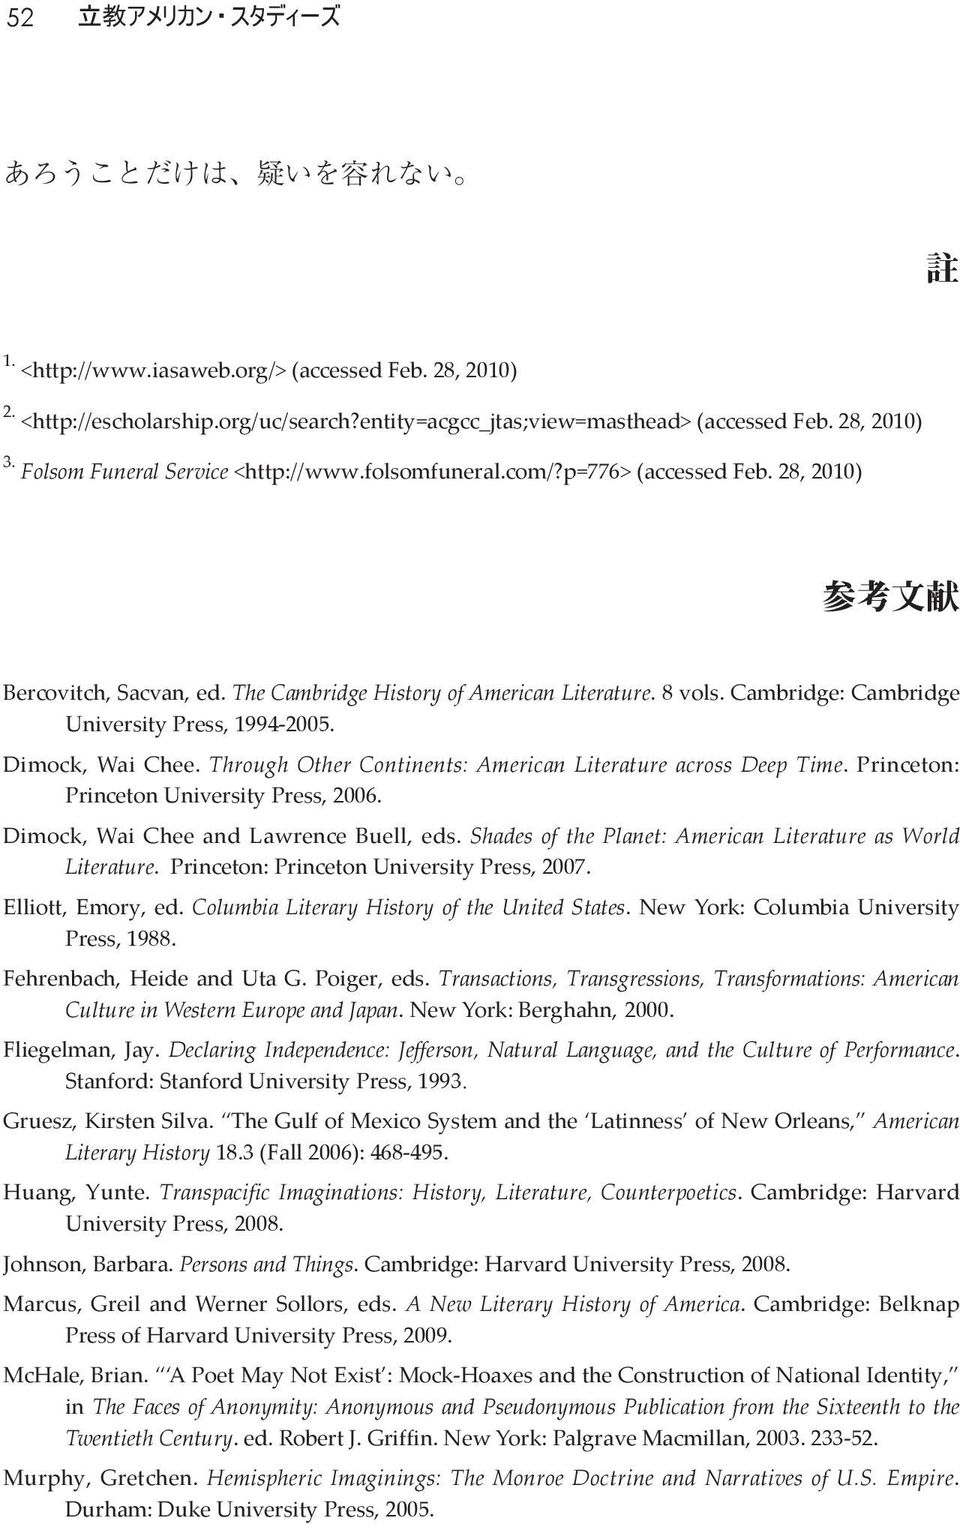 Cambridge: Cambridge University Press, 1994-2005. Dimock, Wai Chee. Through Other Continents: American Literature across Deep Time. Princeton: Princeton University Press, 2006.